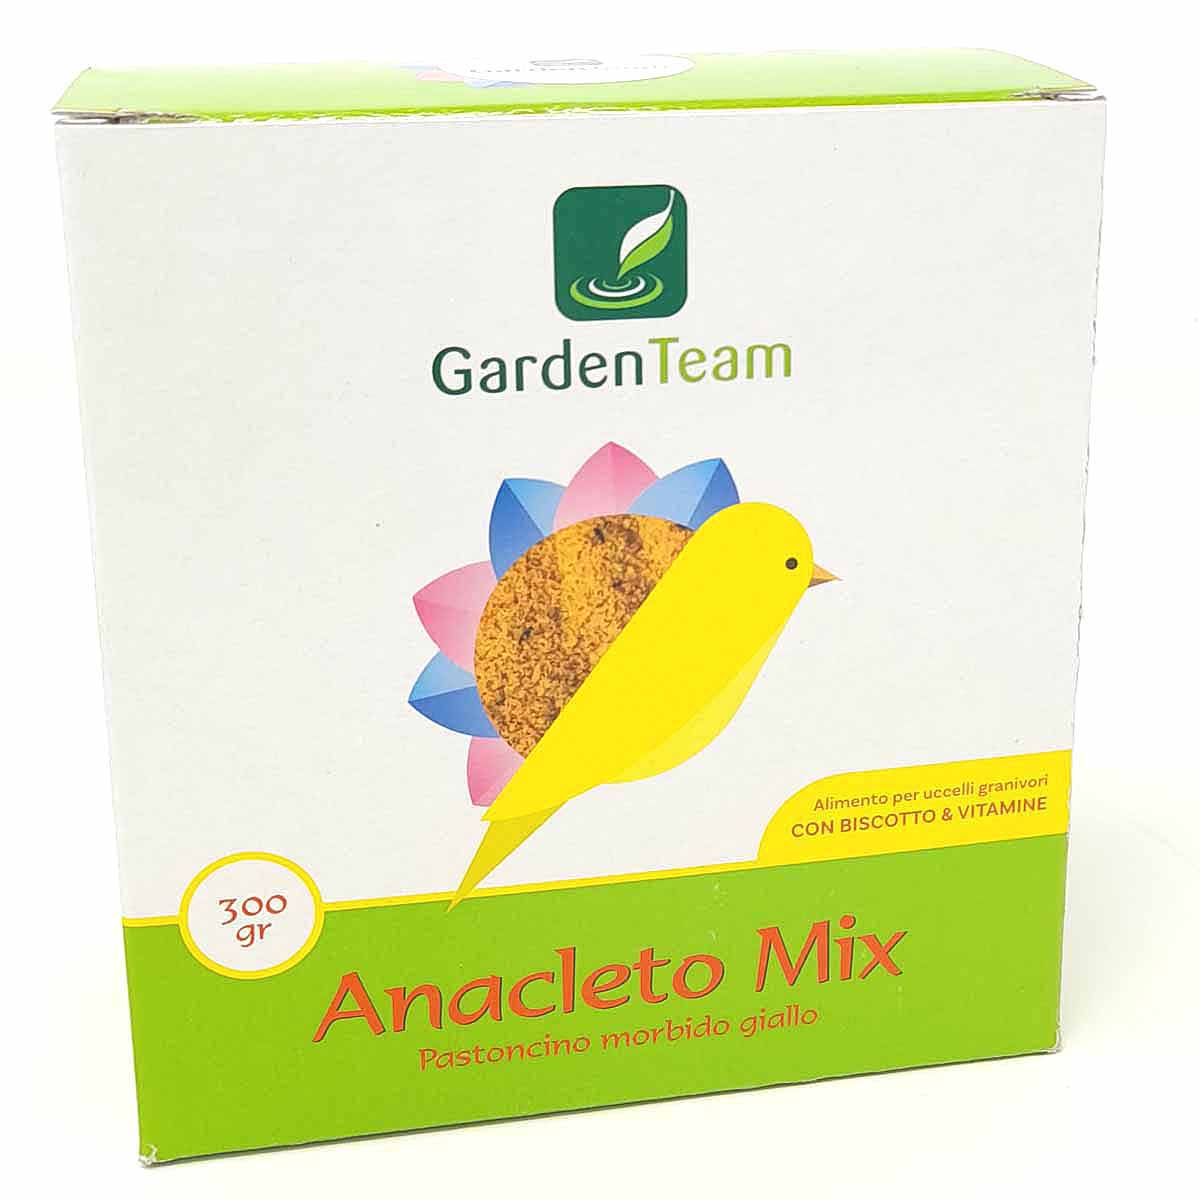 Anacleto Mix – Pastoncino Morbido Giallo